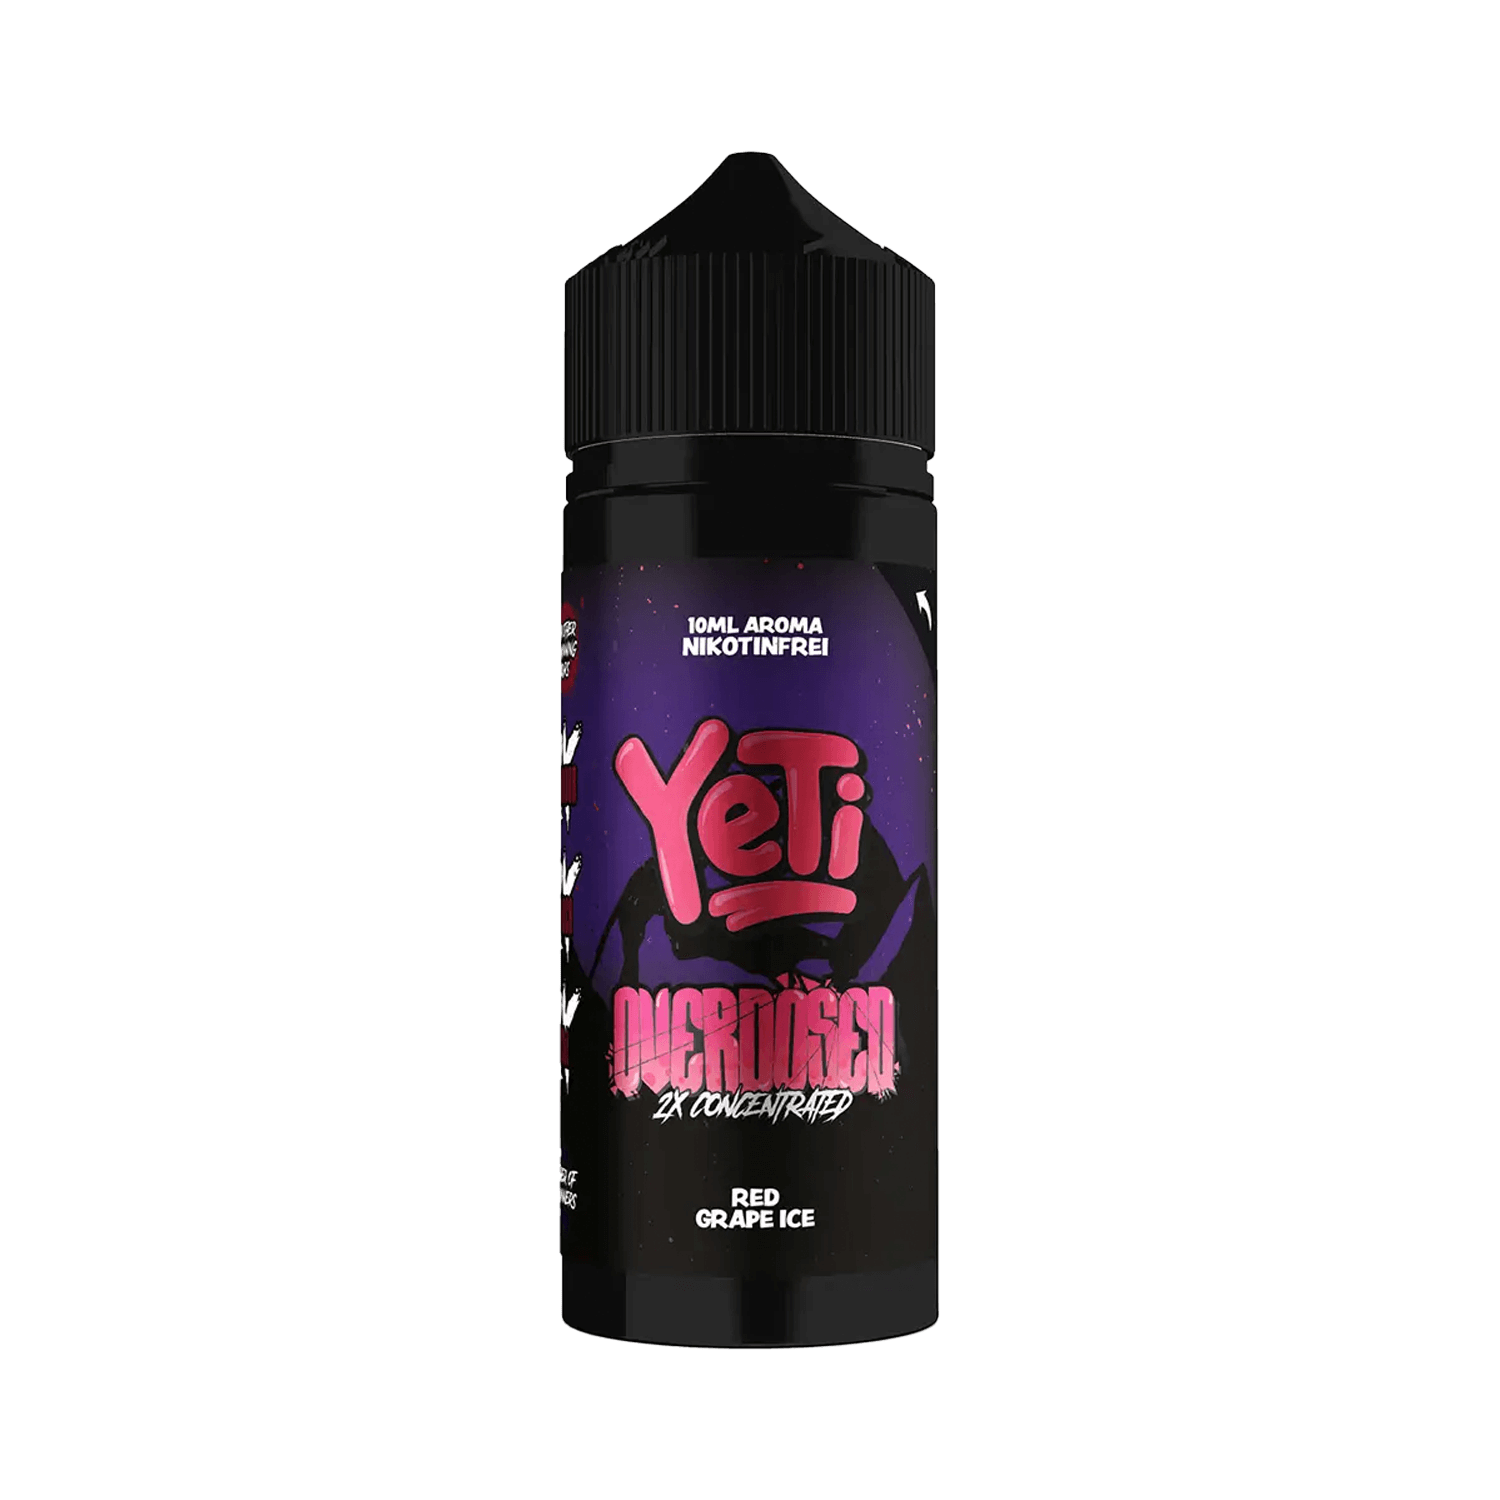 Yeti - Overdosed - Red Grape Ice 10 ml Aroma